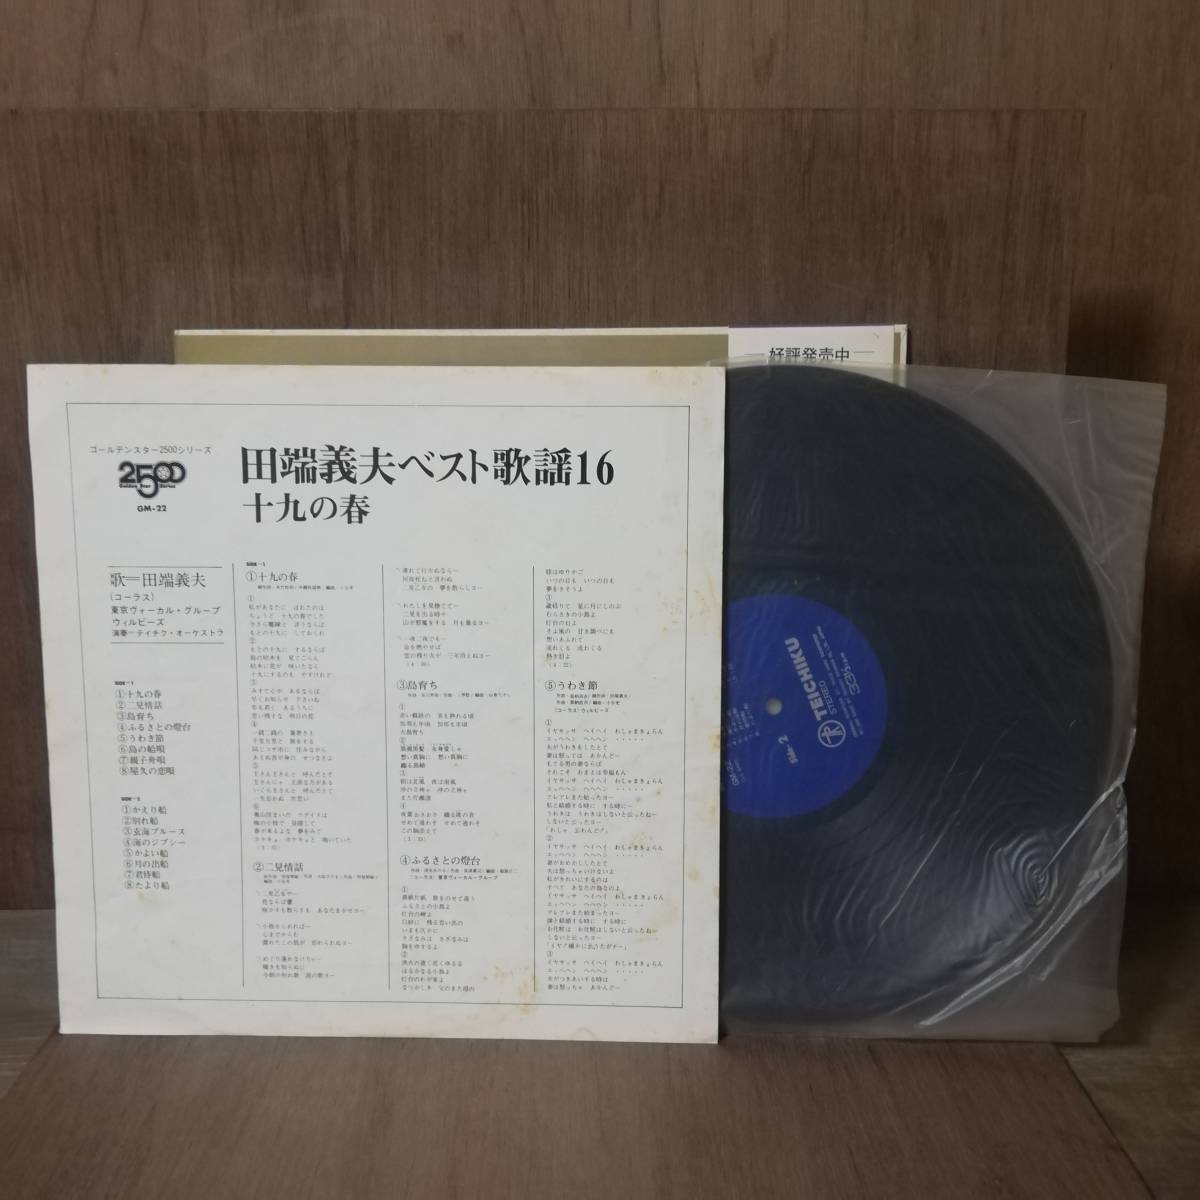 LP - 田端義夫 - ベスト歌謡16 - GM-22 - *24_画像3